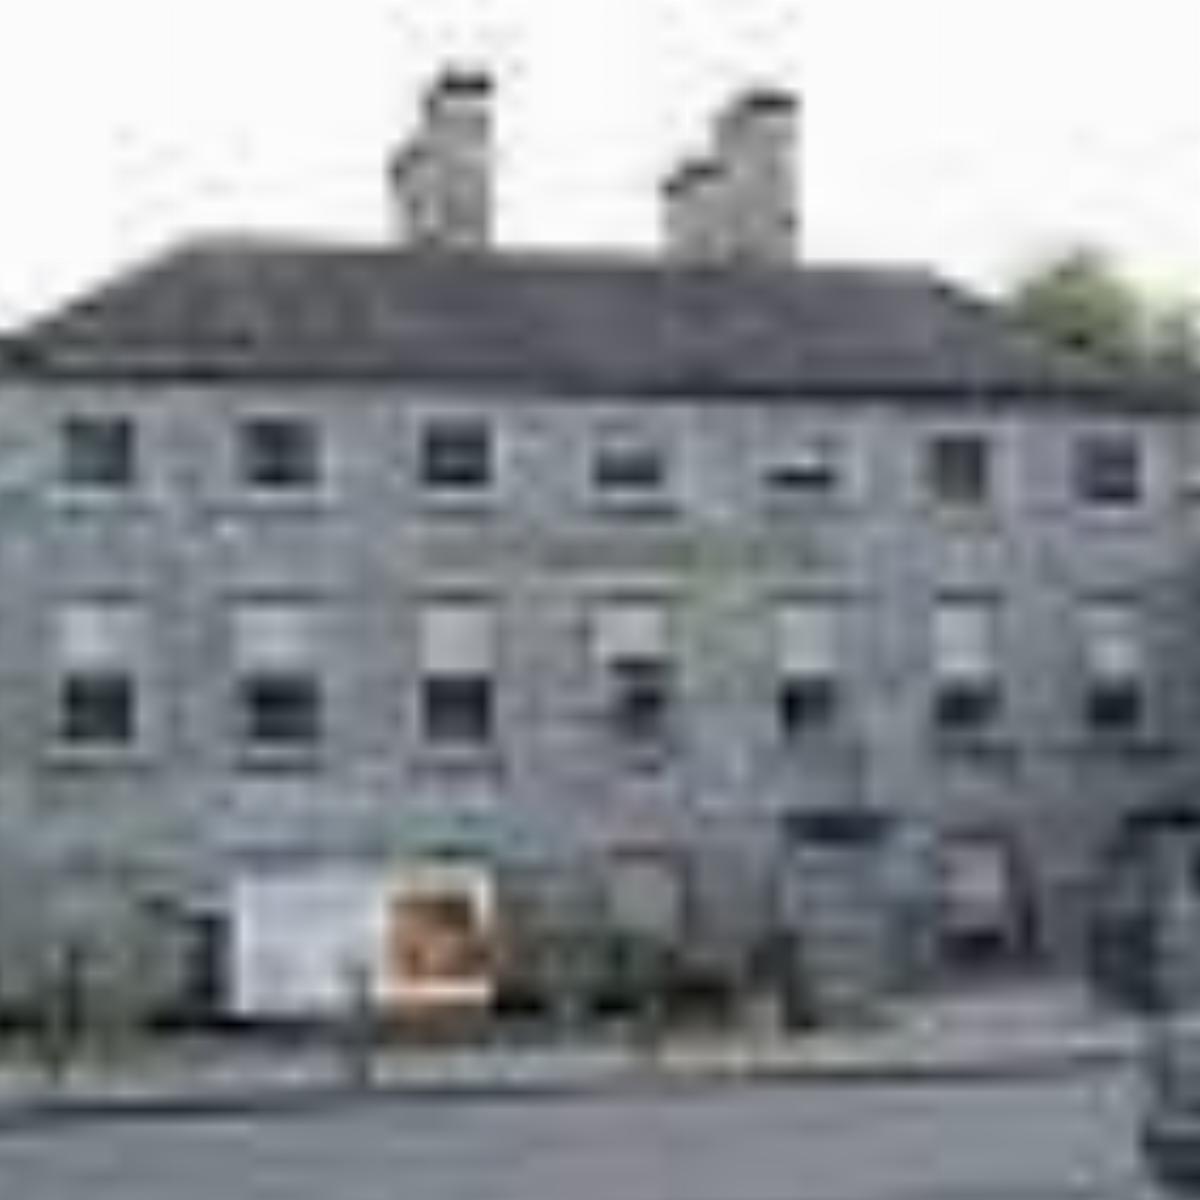 City Campus Hotel Limerick Ireland